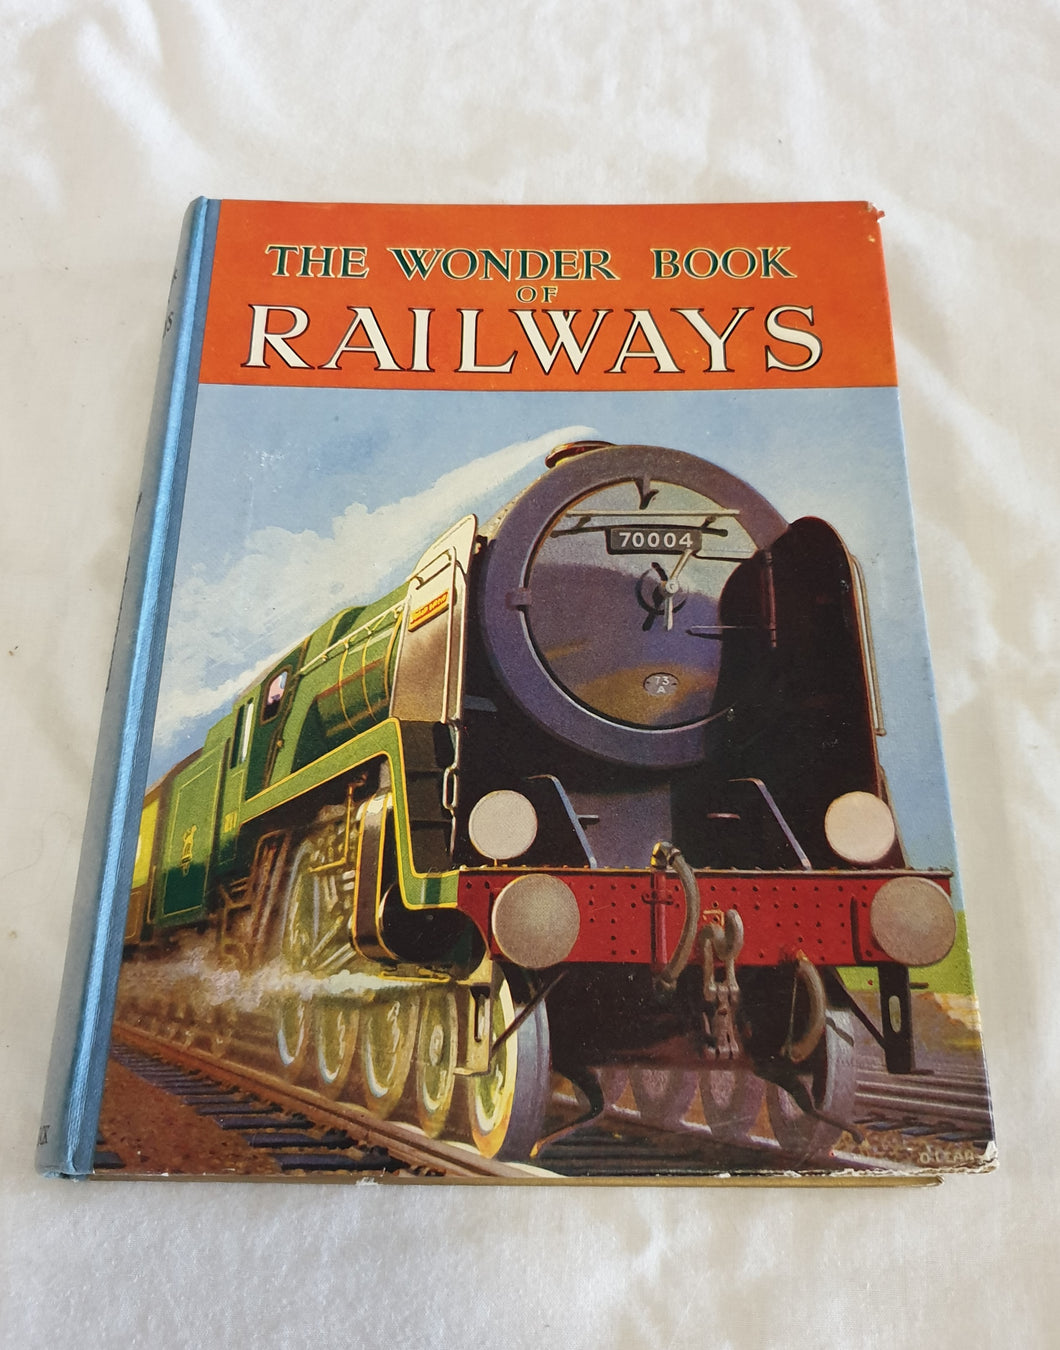 The Wonder Book of Railways